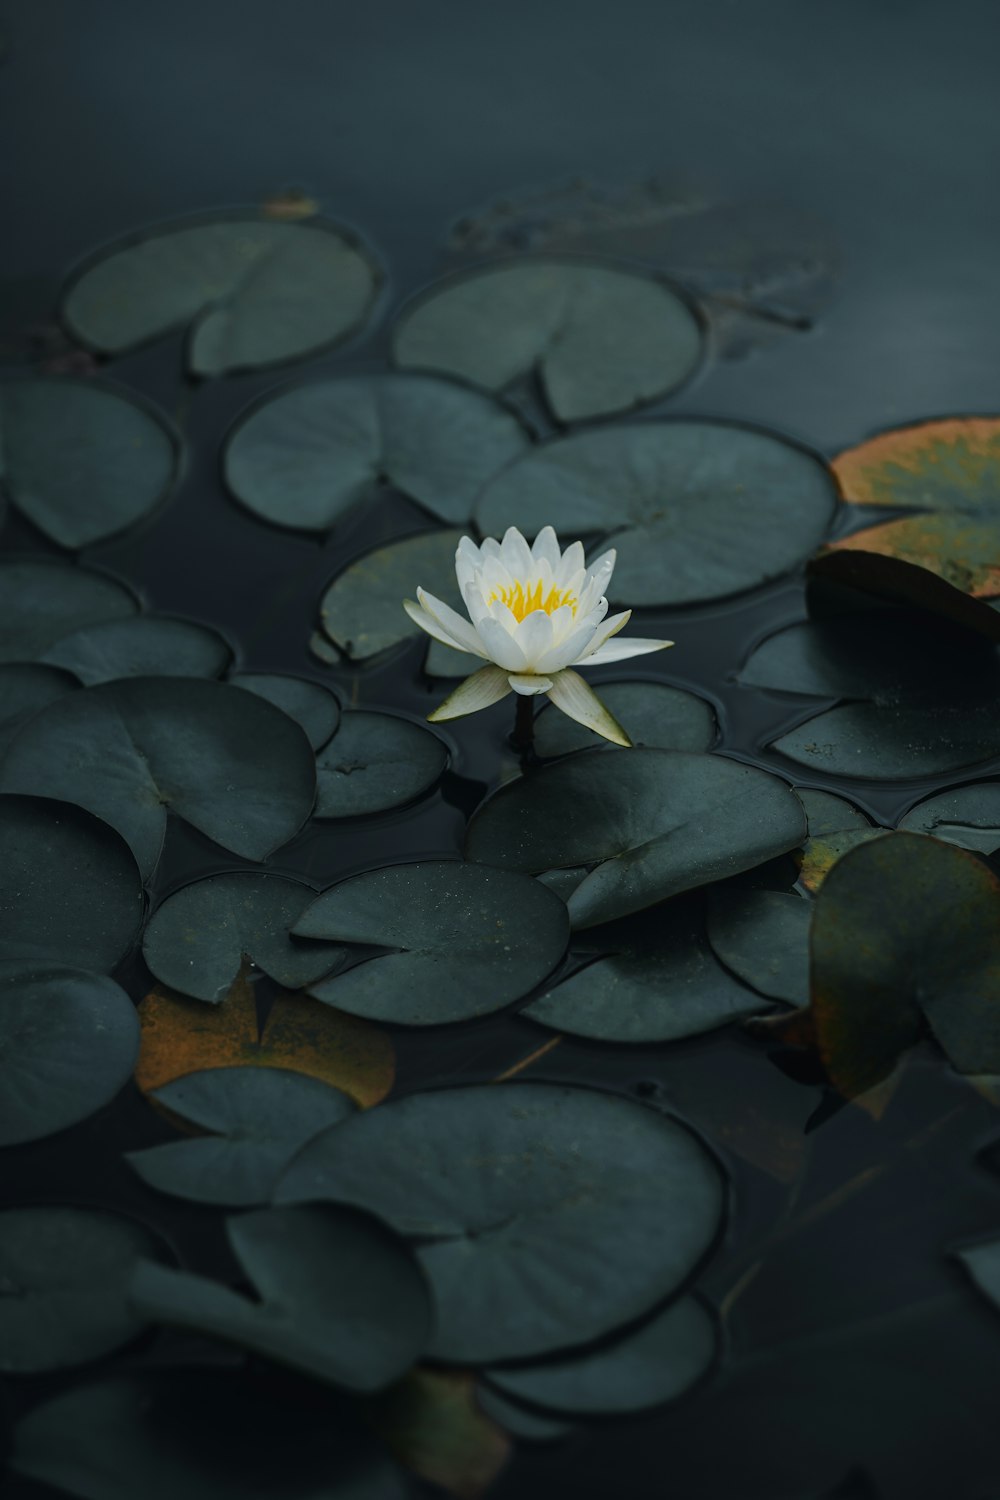 27+ Lotus Pictures | Download Free Images on Unsplash